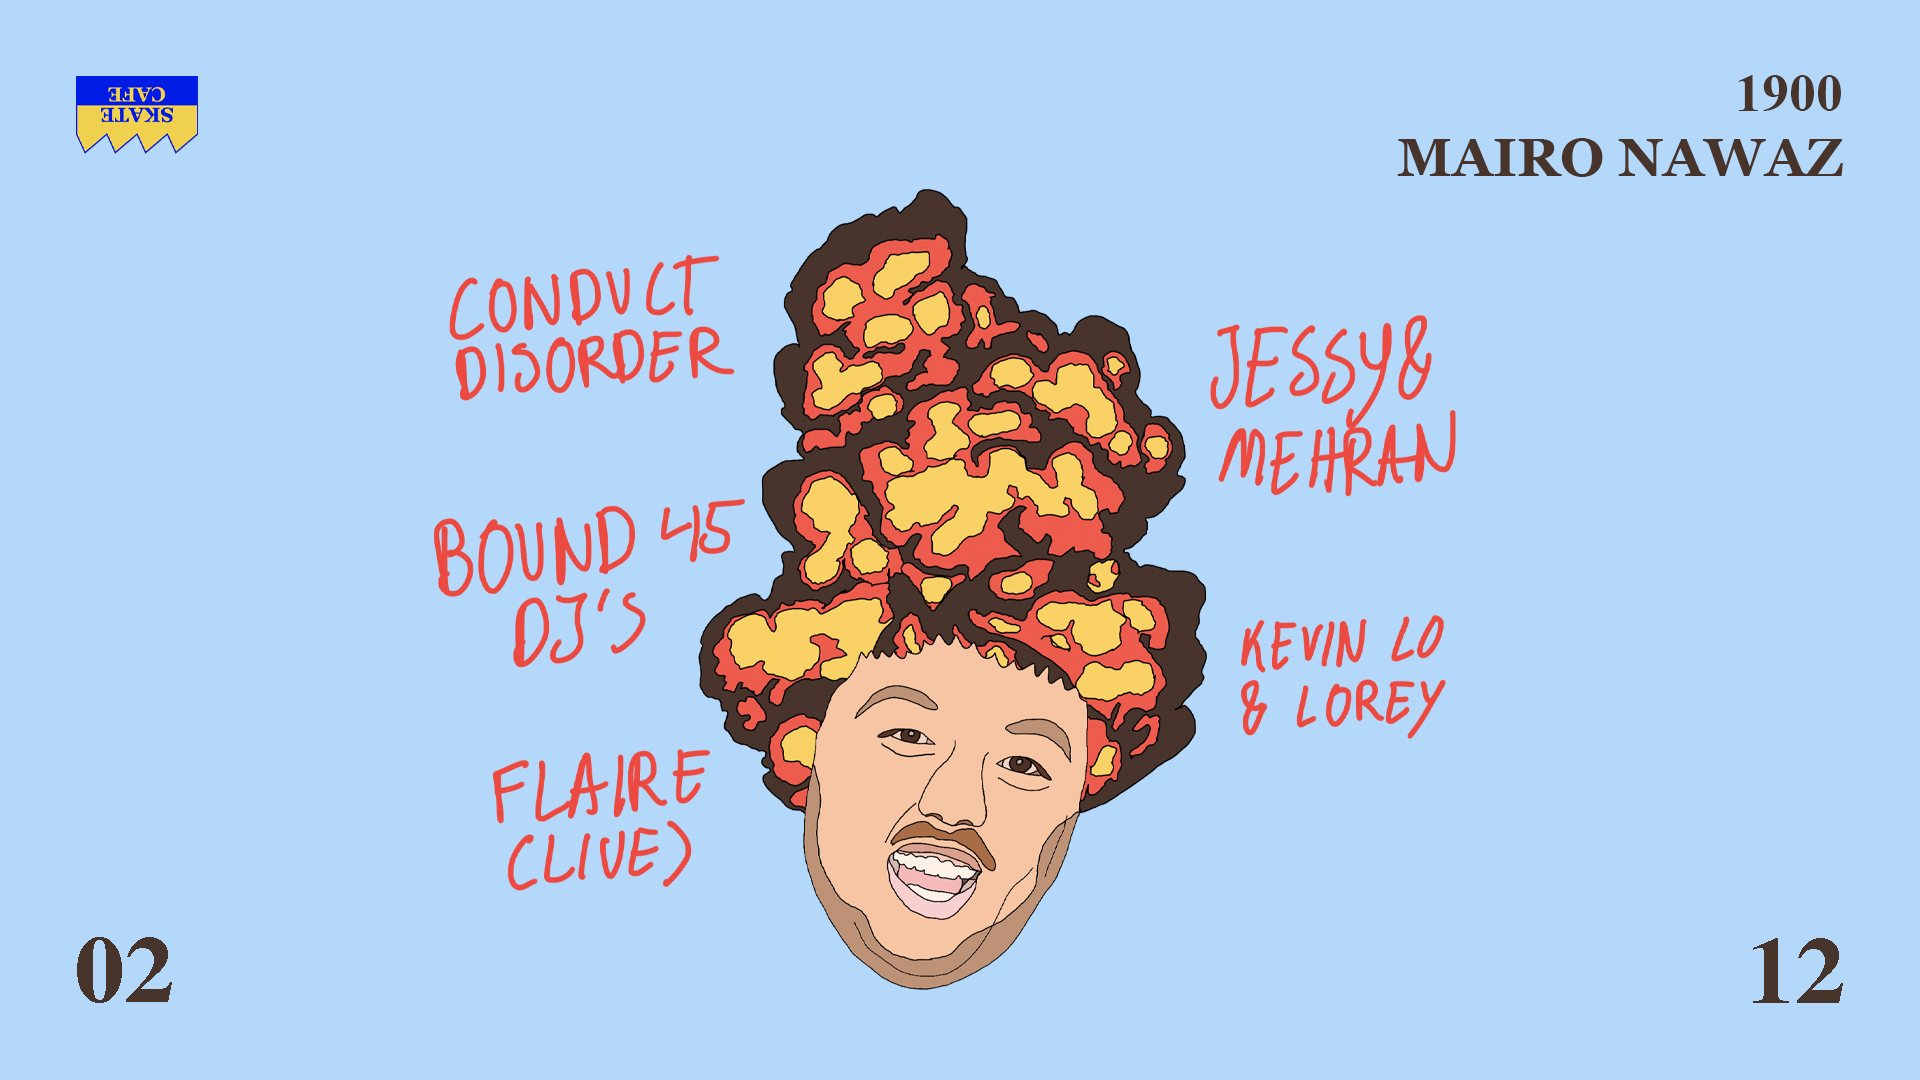 Vrijdag: Jessy, Conduct Disorder, Bound 45 DJ's, Flaire (live), Jessy & Mehran, Kevin Lo & Lorey, Mairo Nawaz header